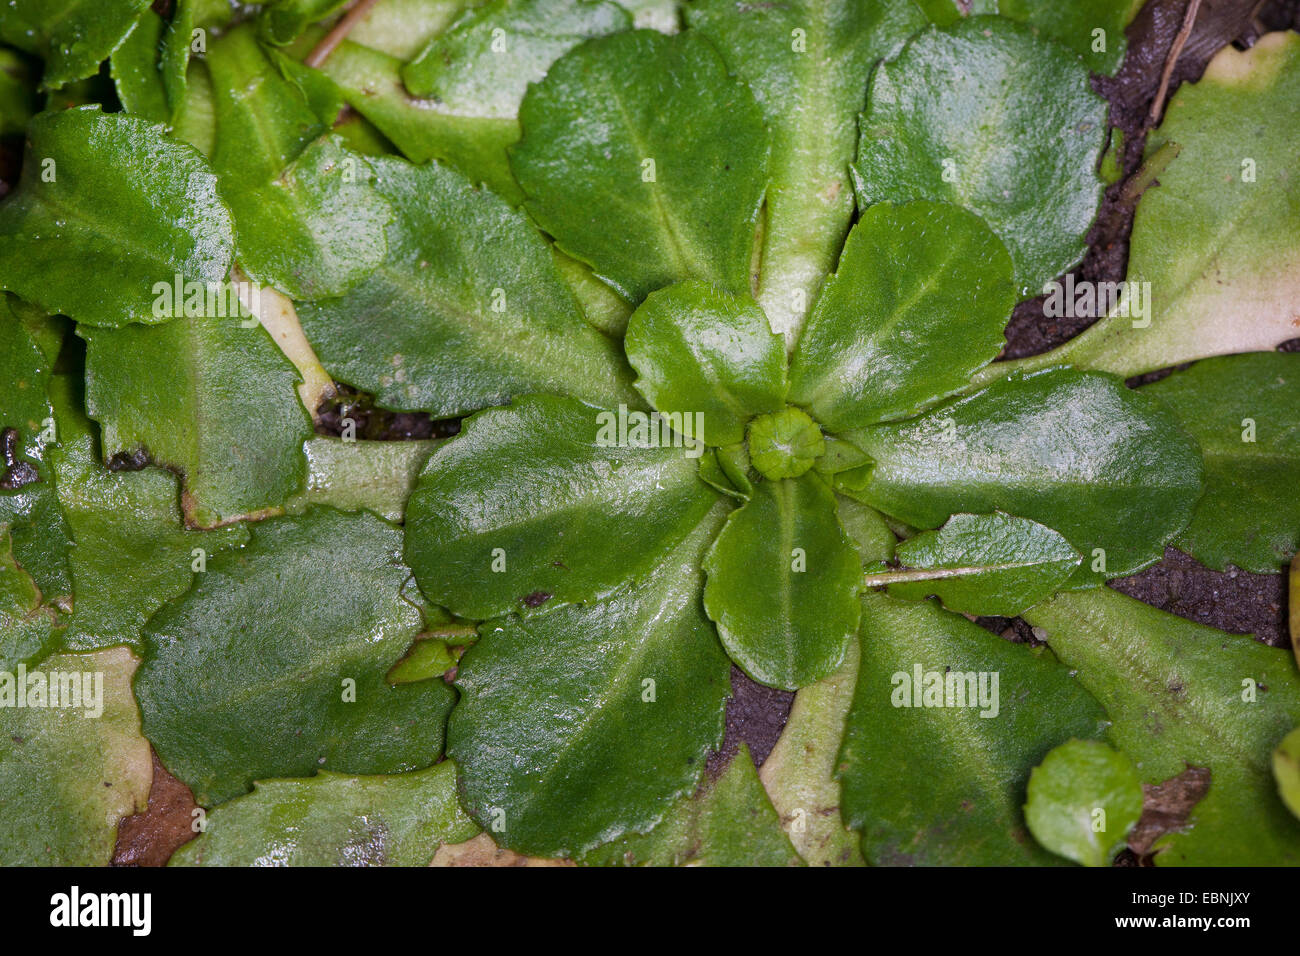 Daisy comune, prato daisy, inglese daisy (Bellis perennis), leaf rosetta, Germania Foto Stock